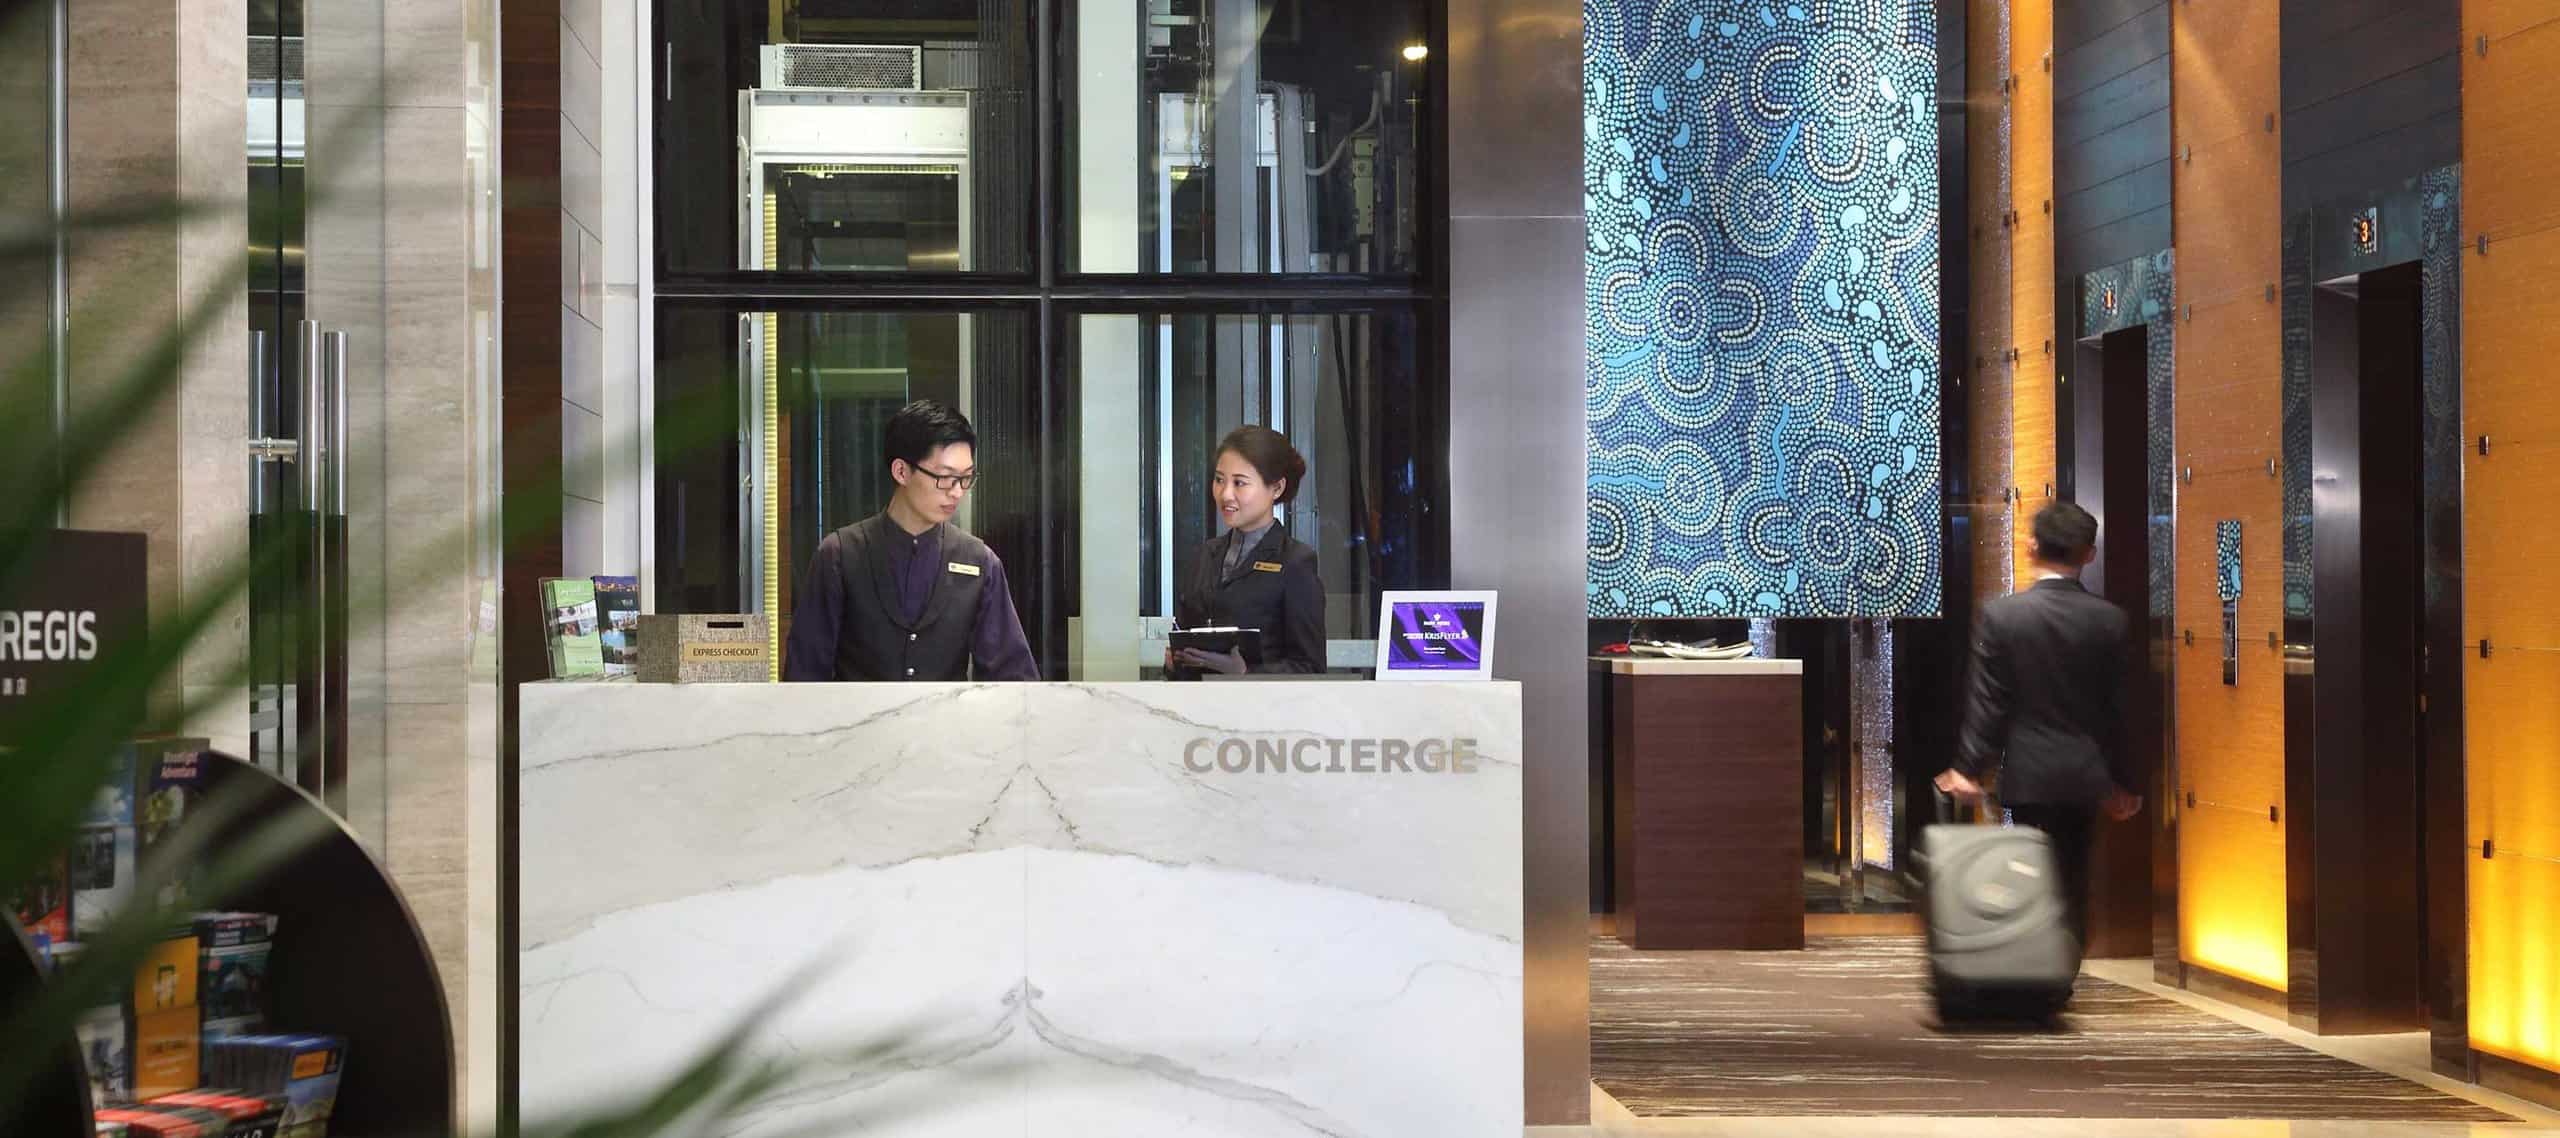 Park Regis Singapore Hotel Concierge